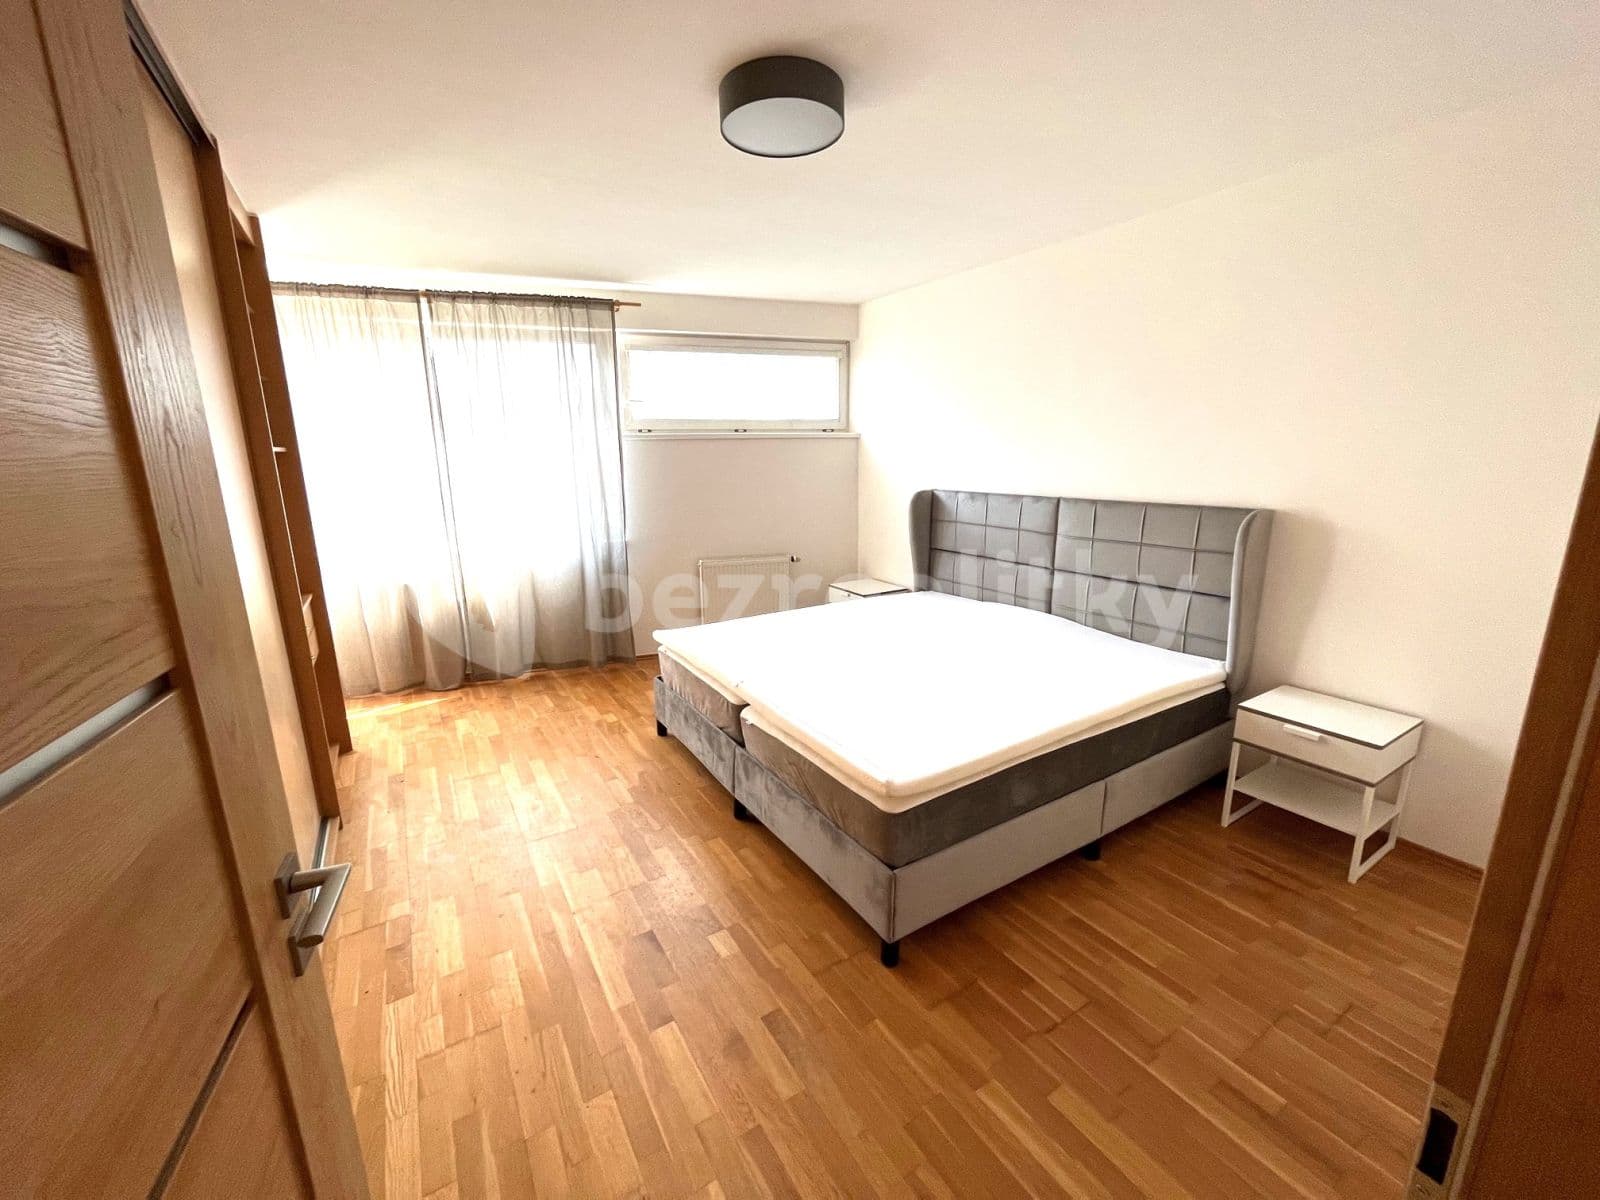 1 bedroom with open-plan kitchen flat to rent, 56 m², V Zeleném údolí, Prague, Prague